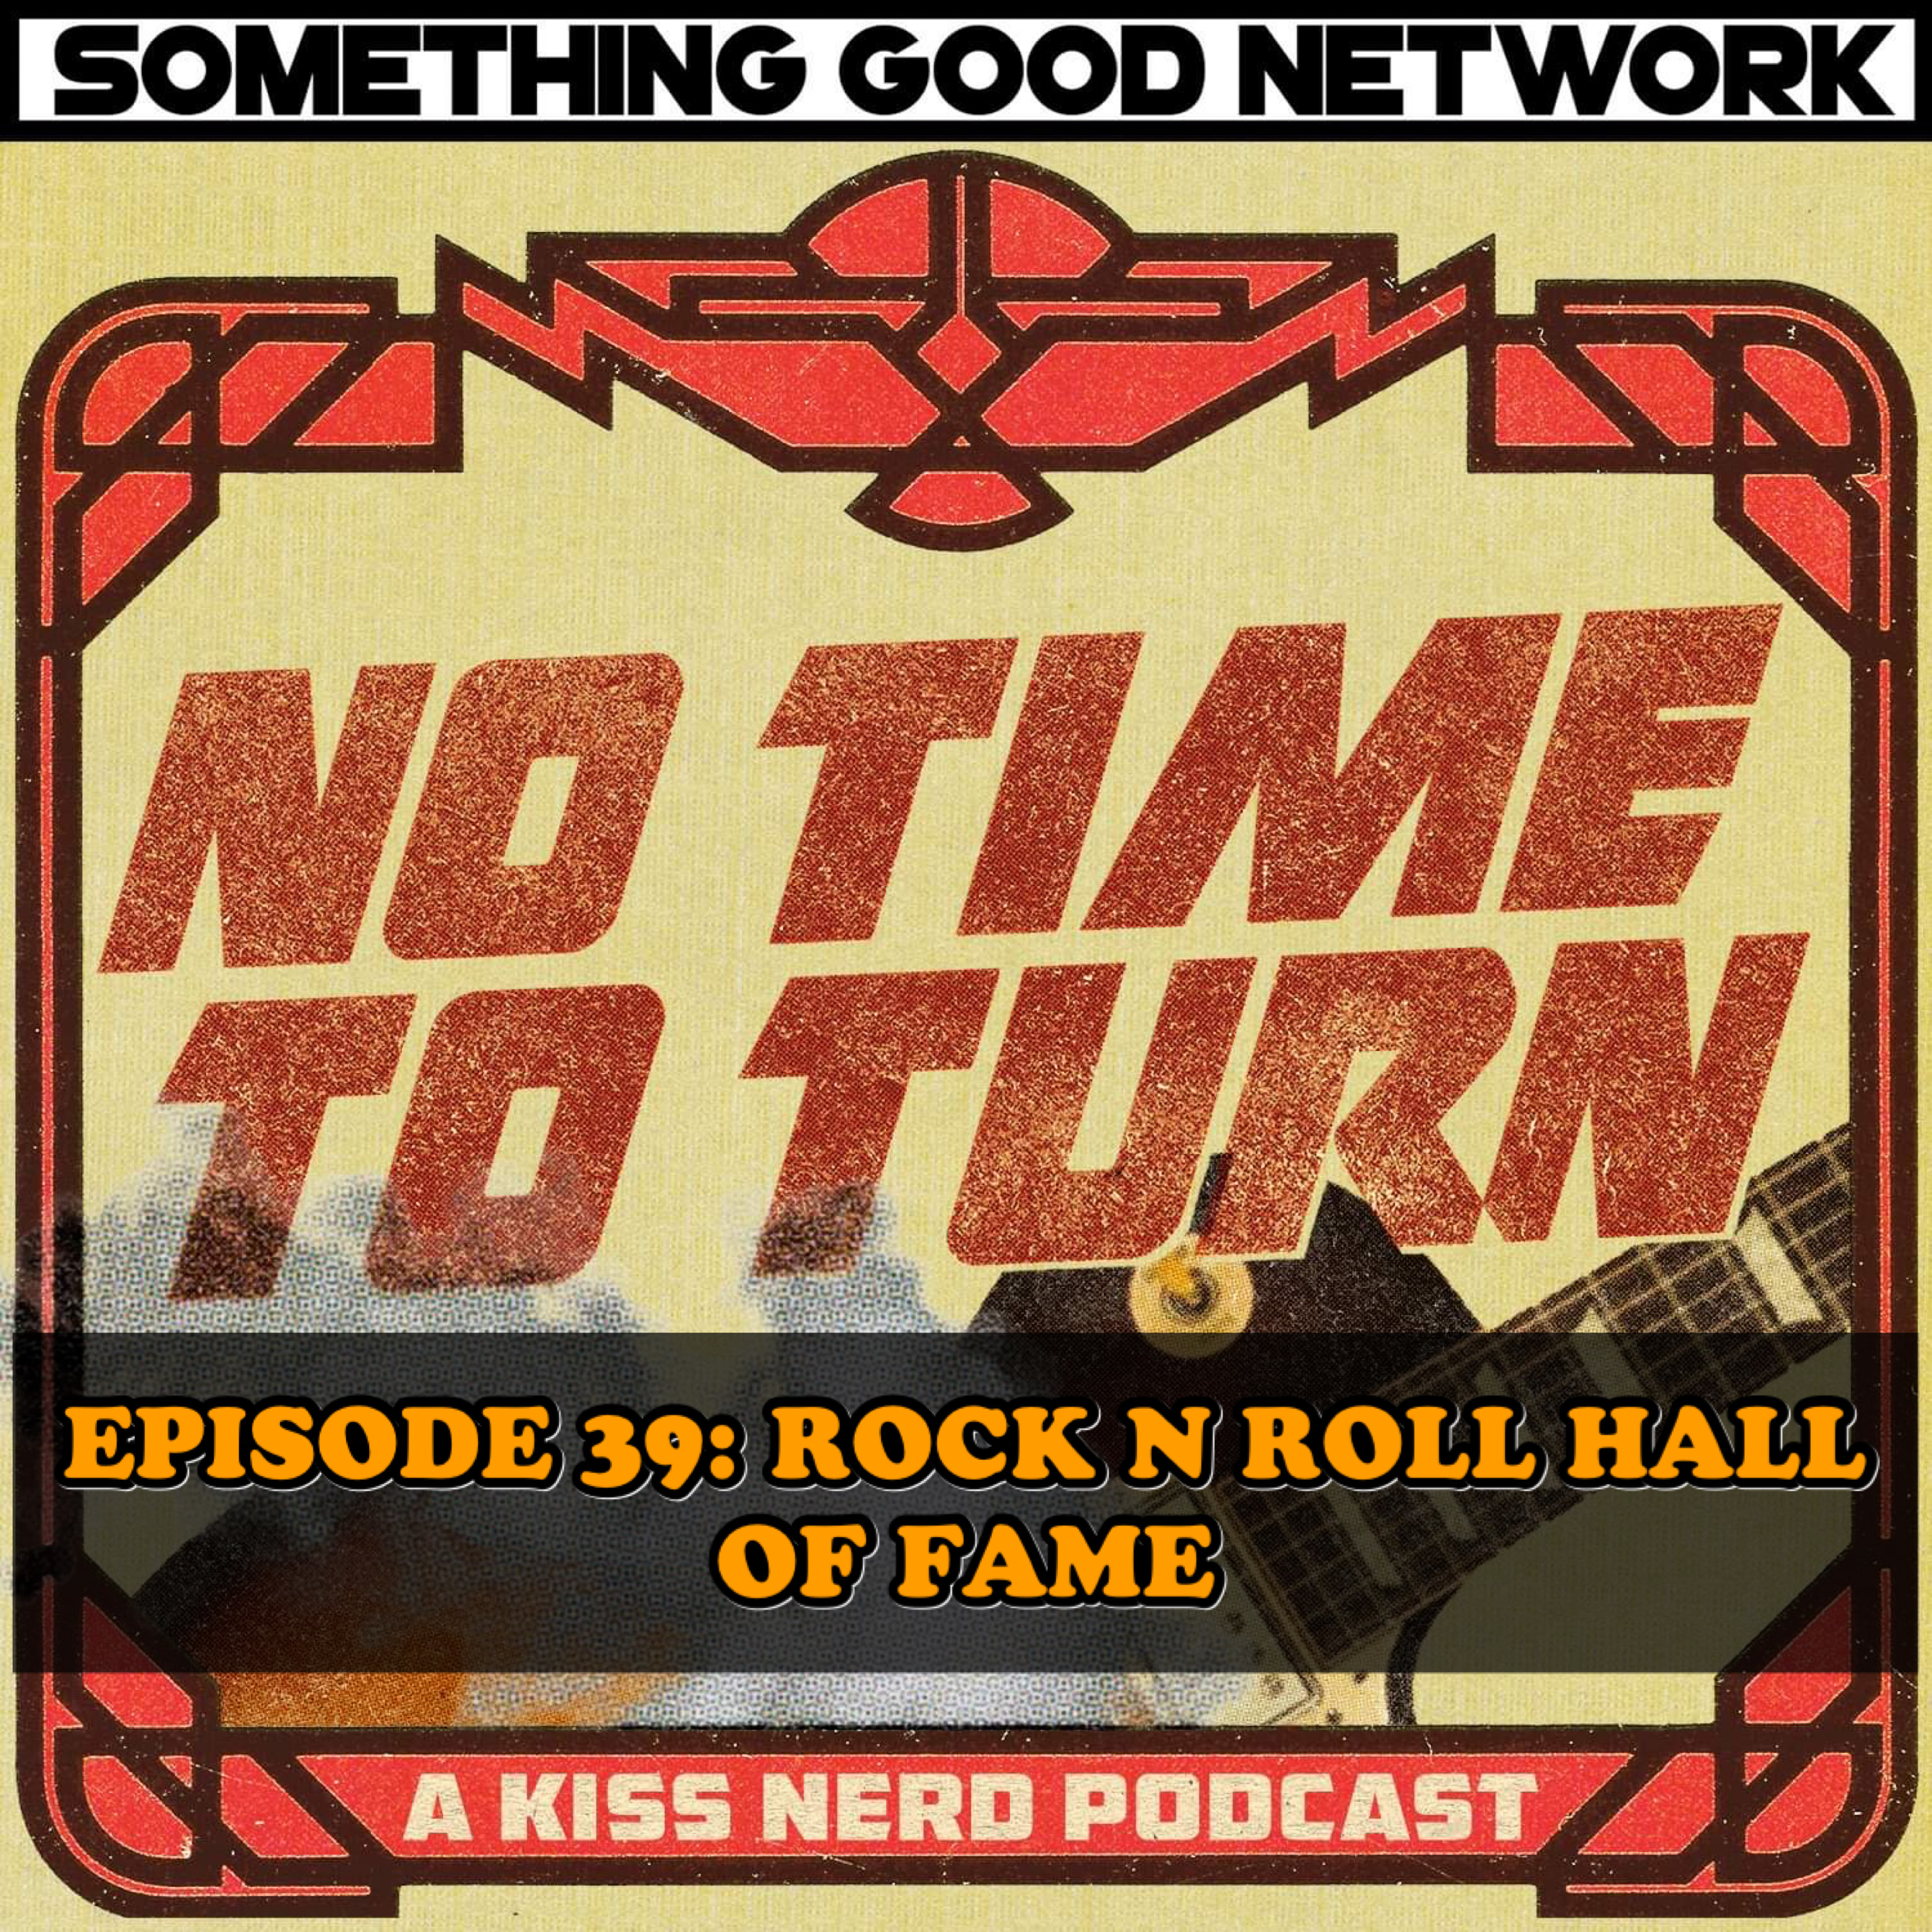 Episode 39 - Rock N Roll Hall of Fame